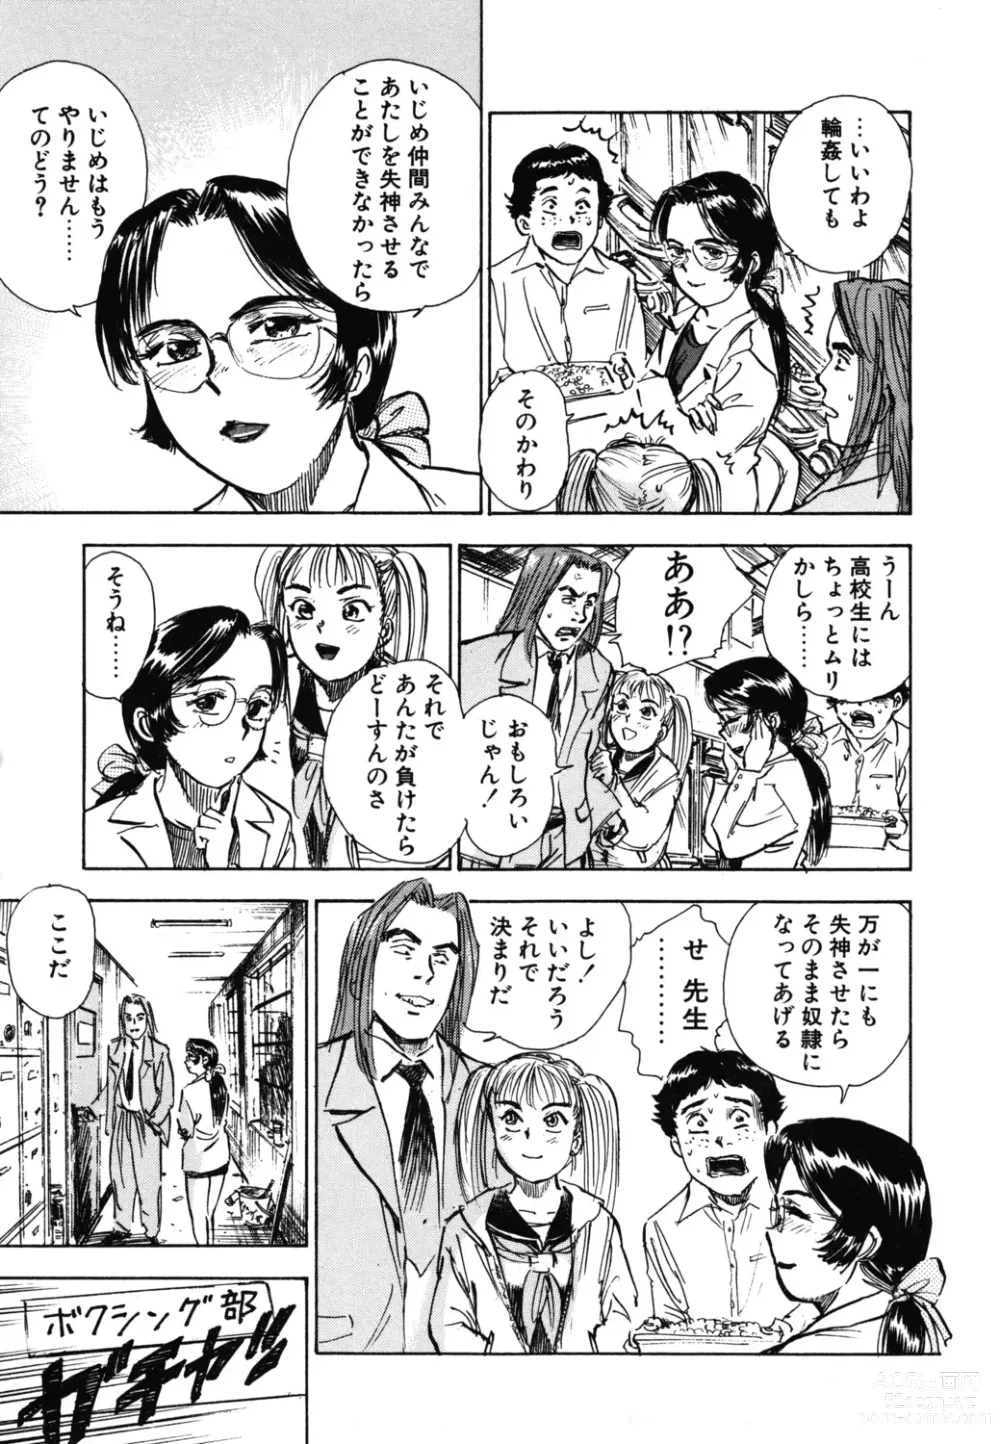 Page 11 of manga Abunai Reiko Sensei 1